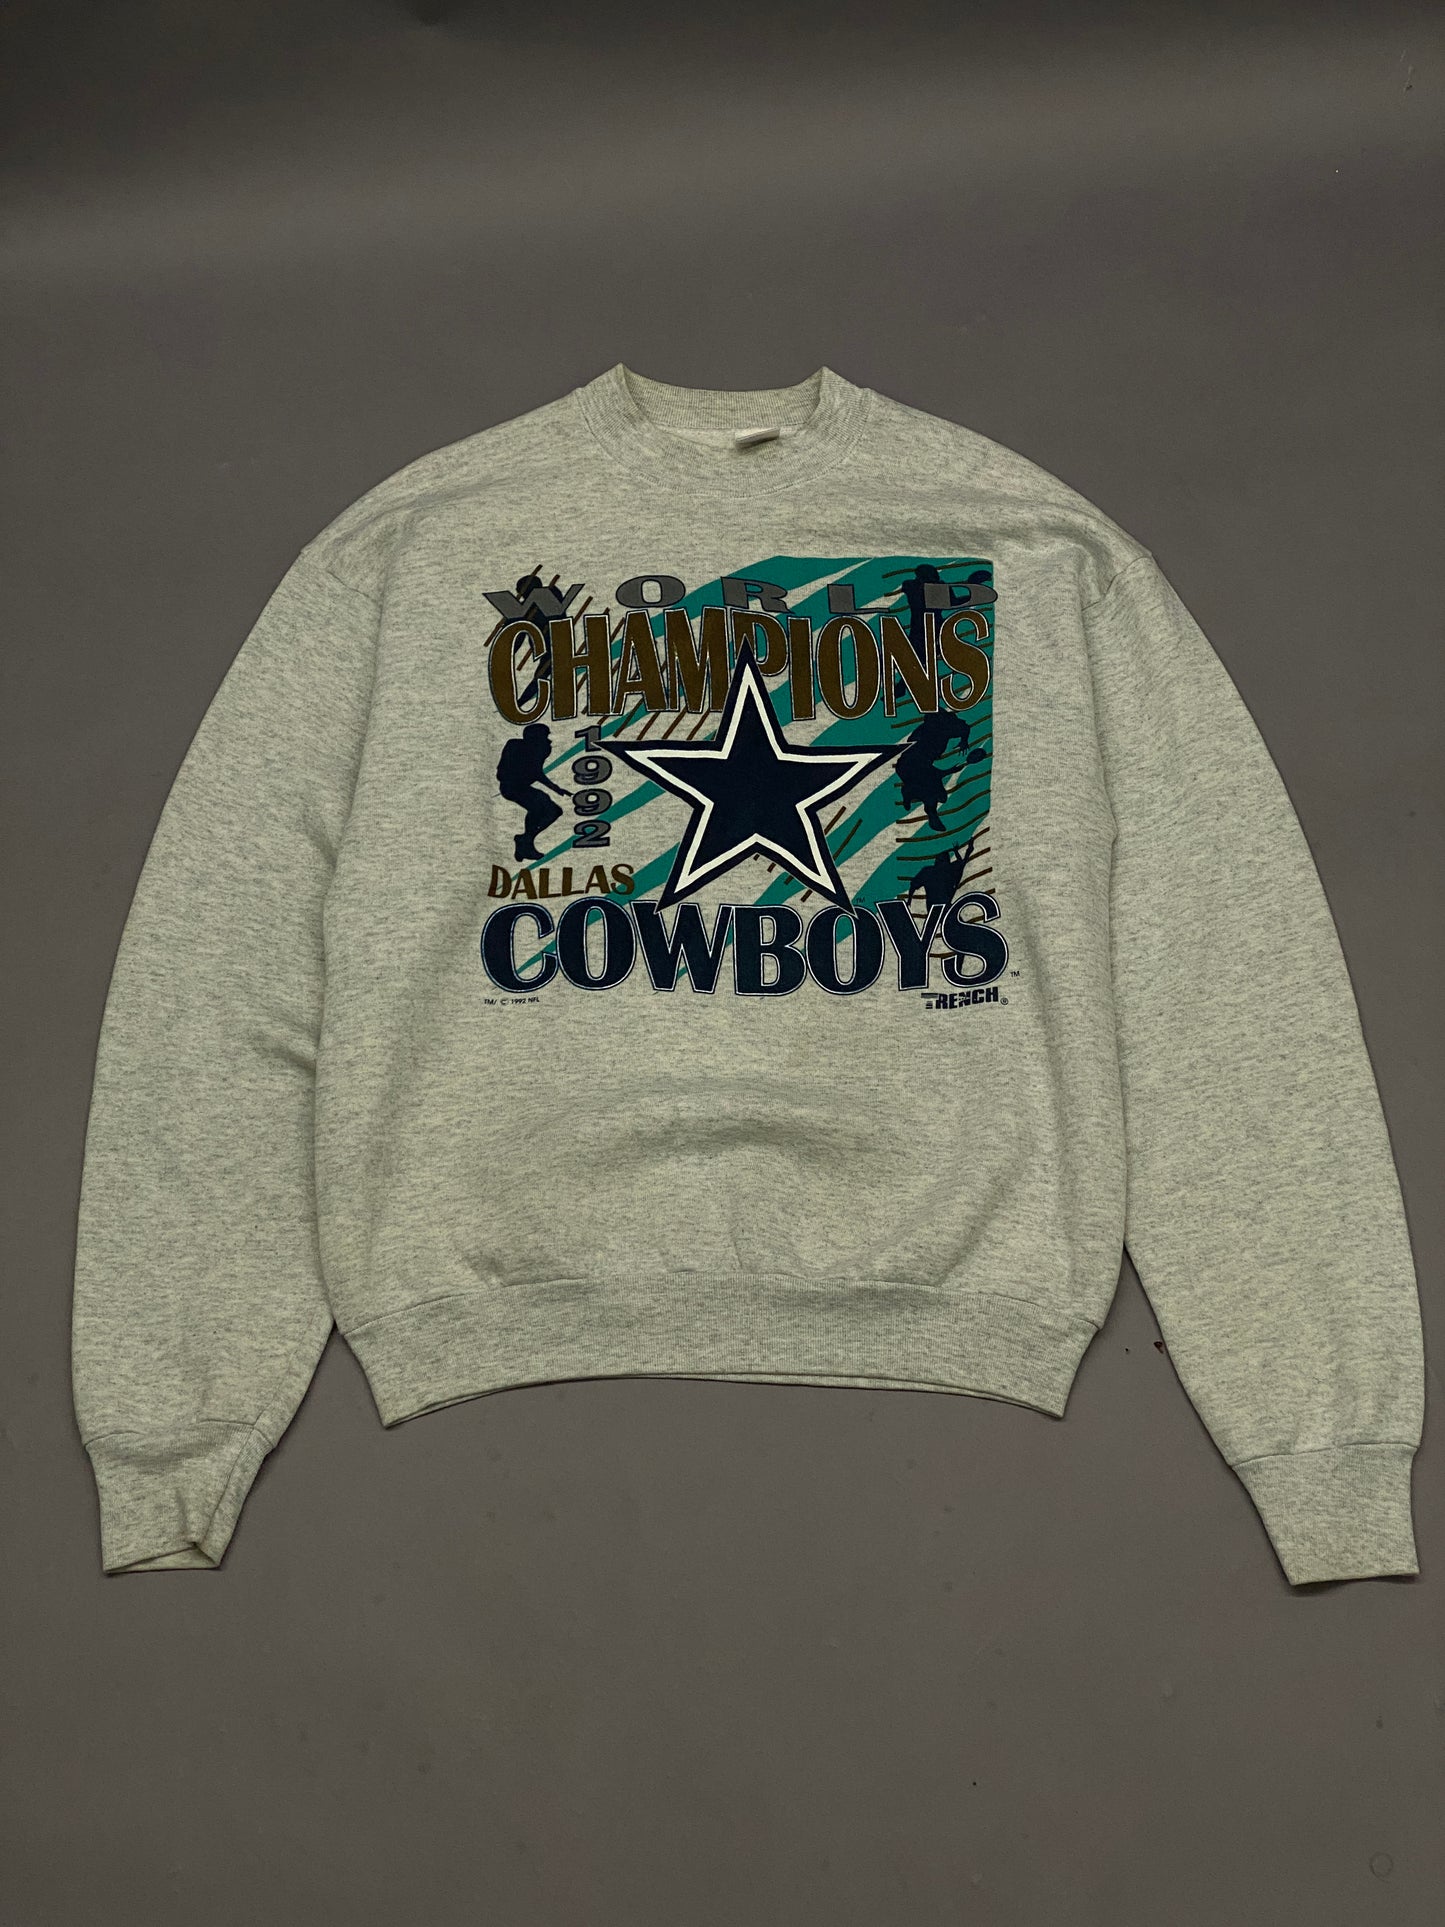 Cowboys 1992 Vintage Sweatshirt